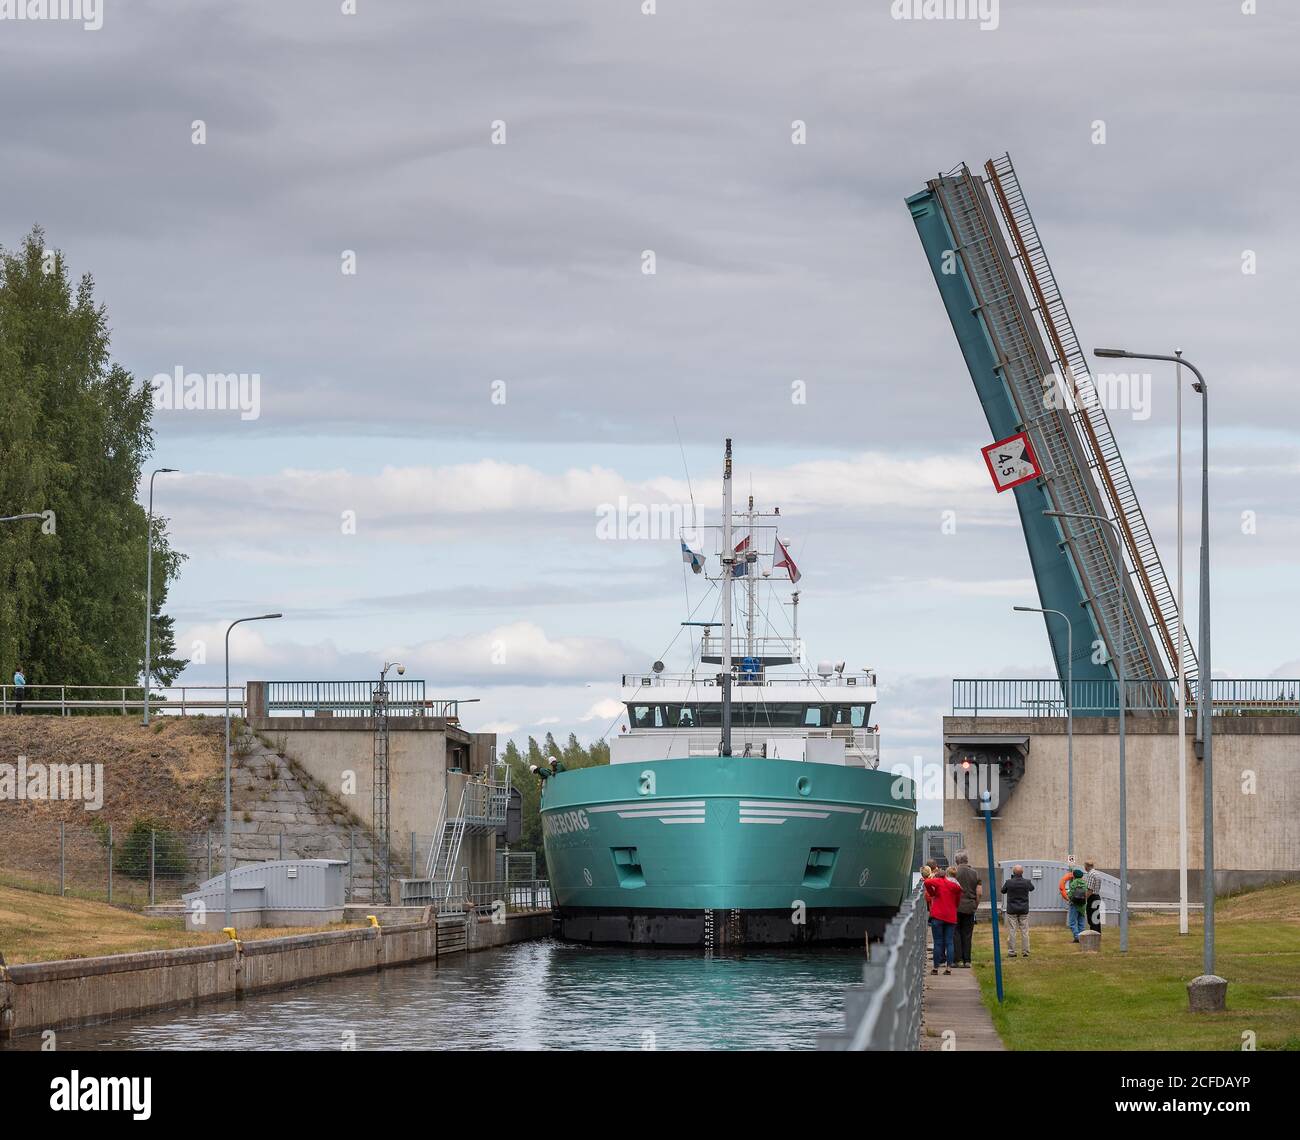 Nave nel canale Taiple, collegamento tra i laghi Unnukka e Haukivesi, Varkaus, Finlandia Foto Stock